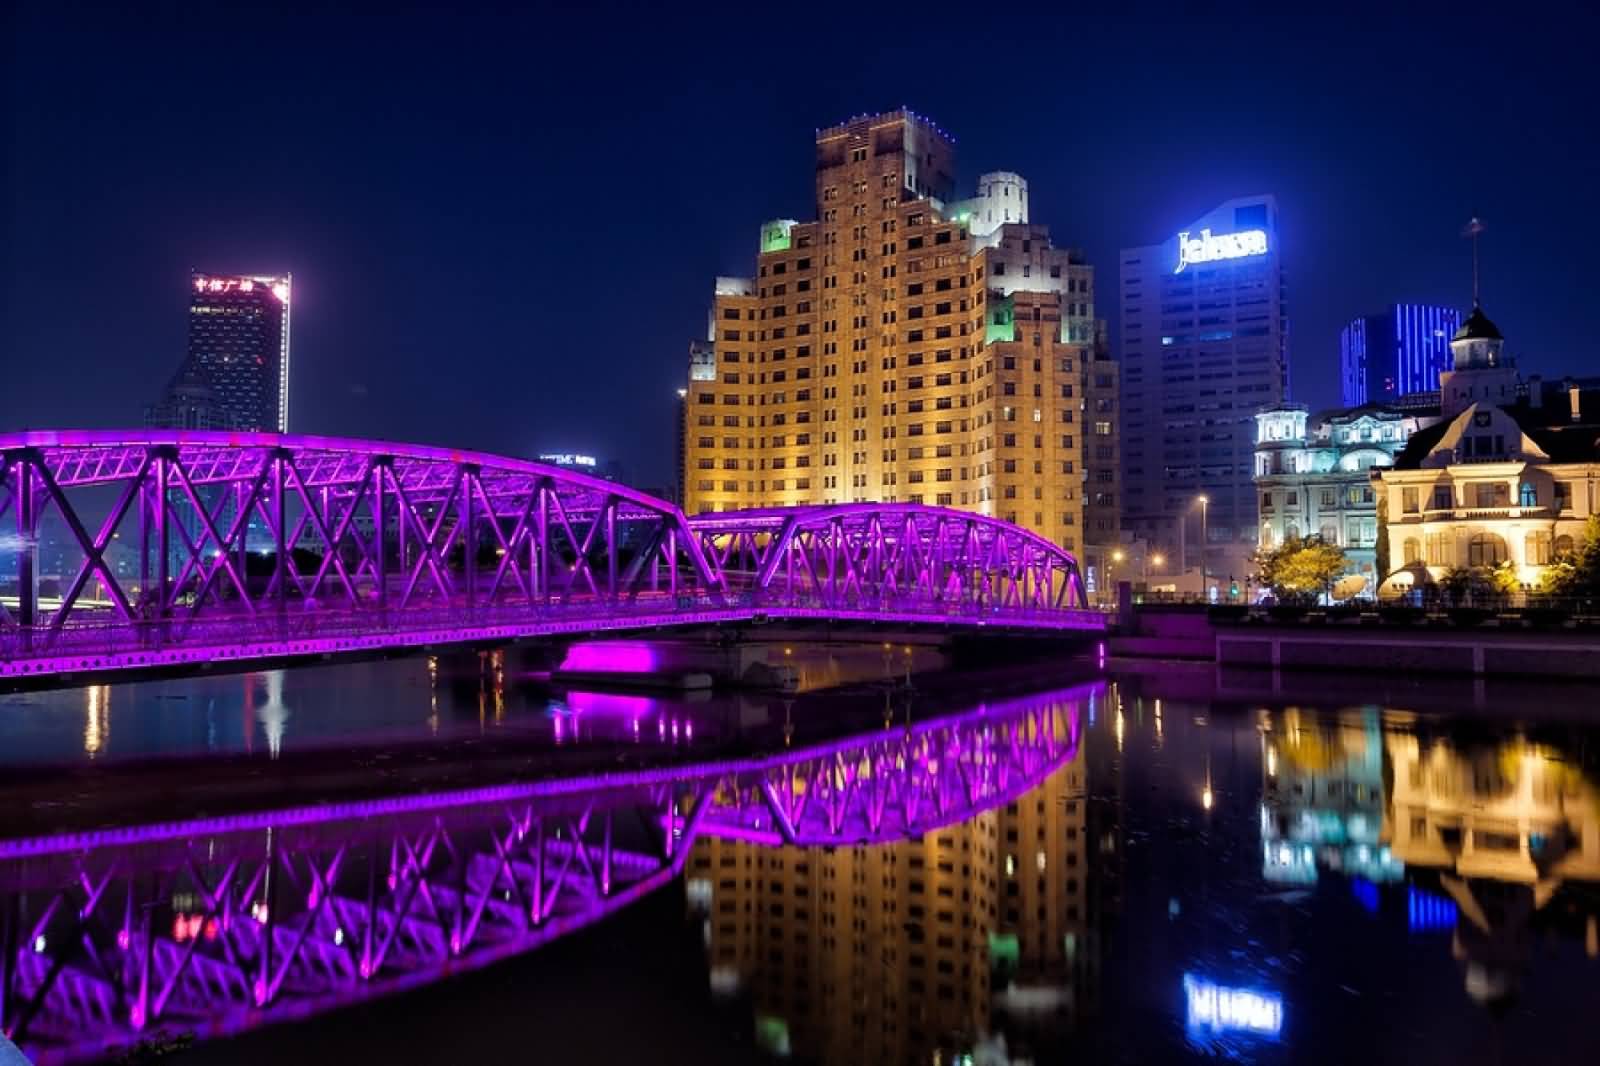 Water Reflection Of Waibaidu Bridge At Night With Pink Lights